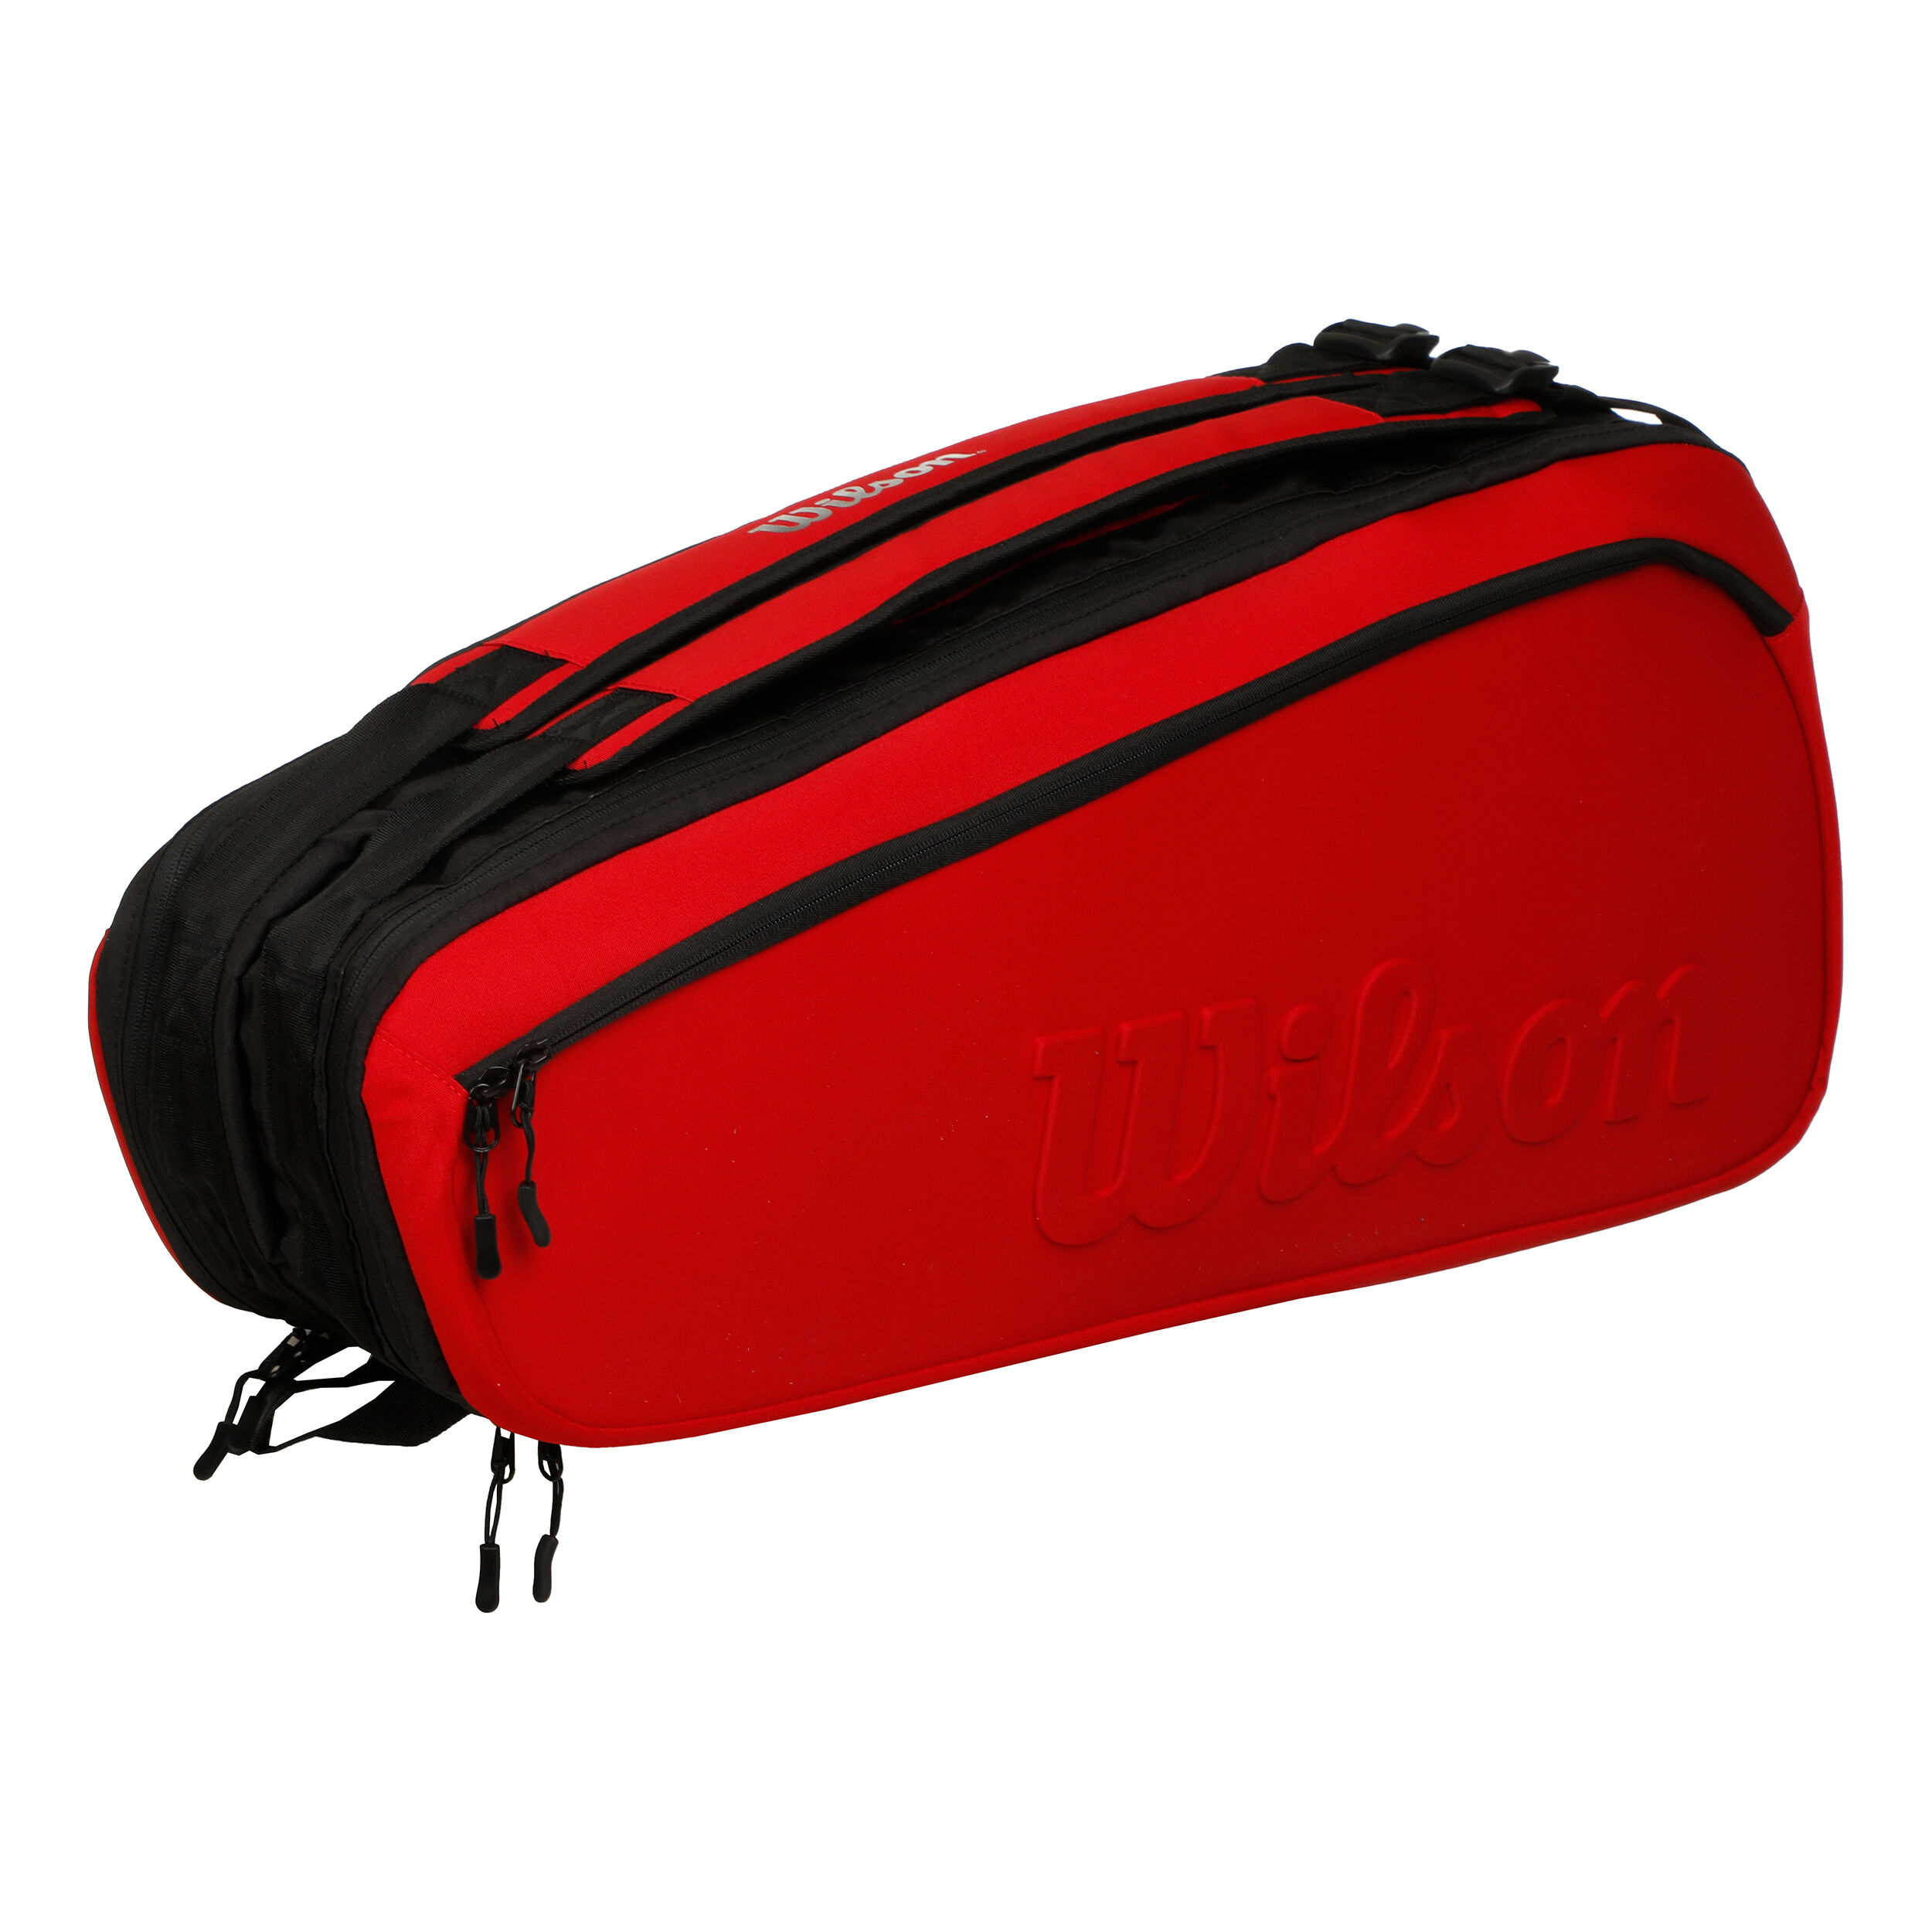 Clash Super Tour Racket Bag 6 Pack - Red